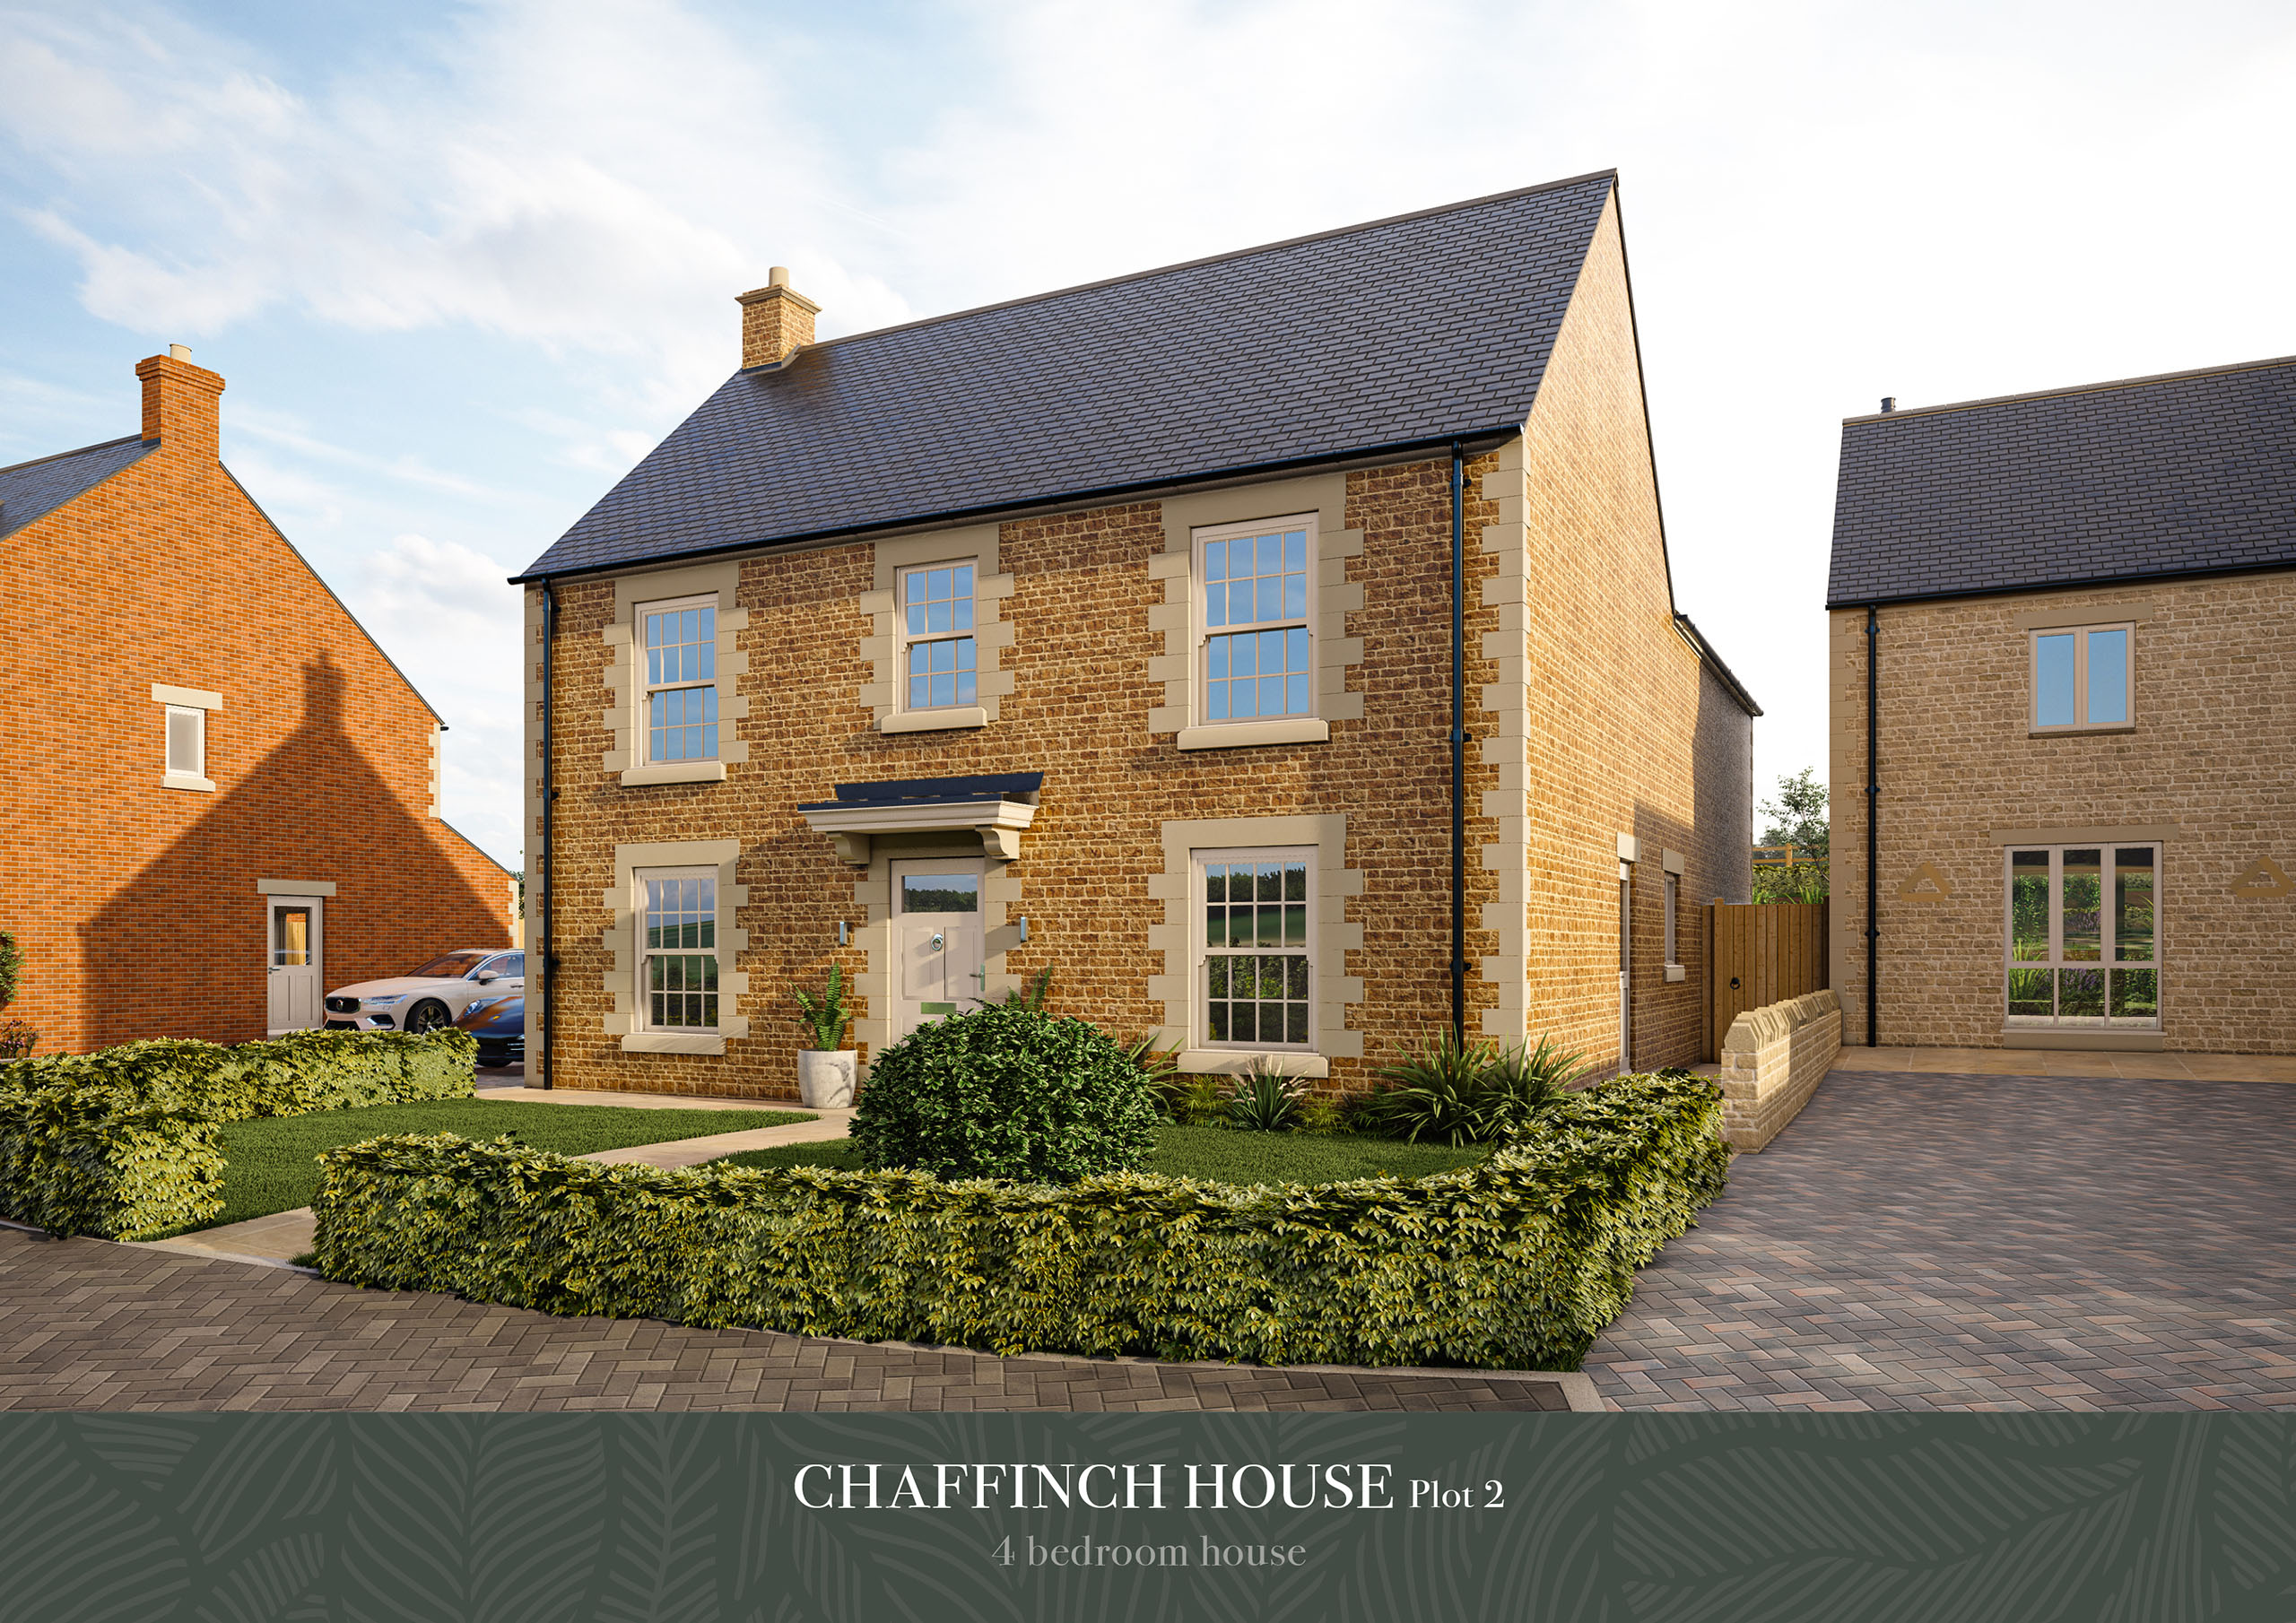 Chaffinch House - Plot 2 